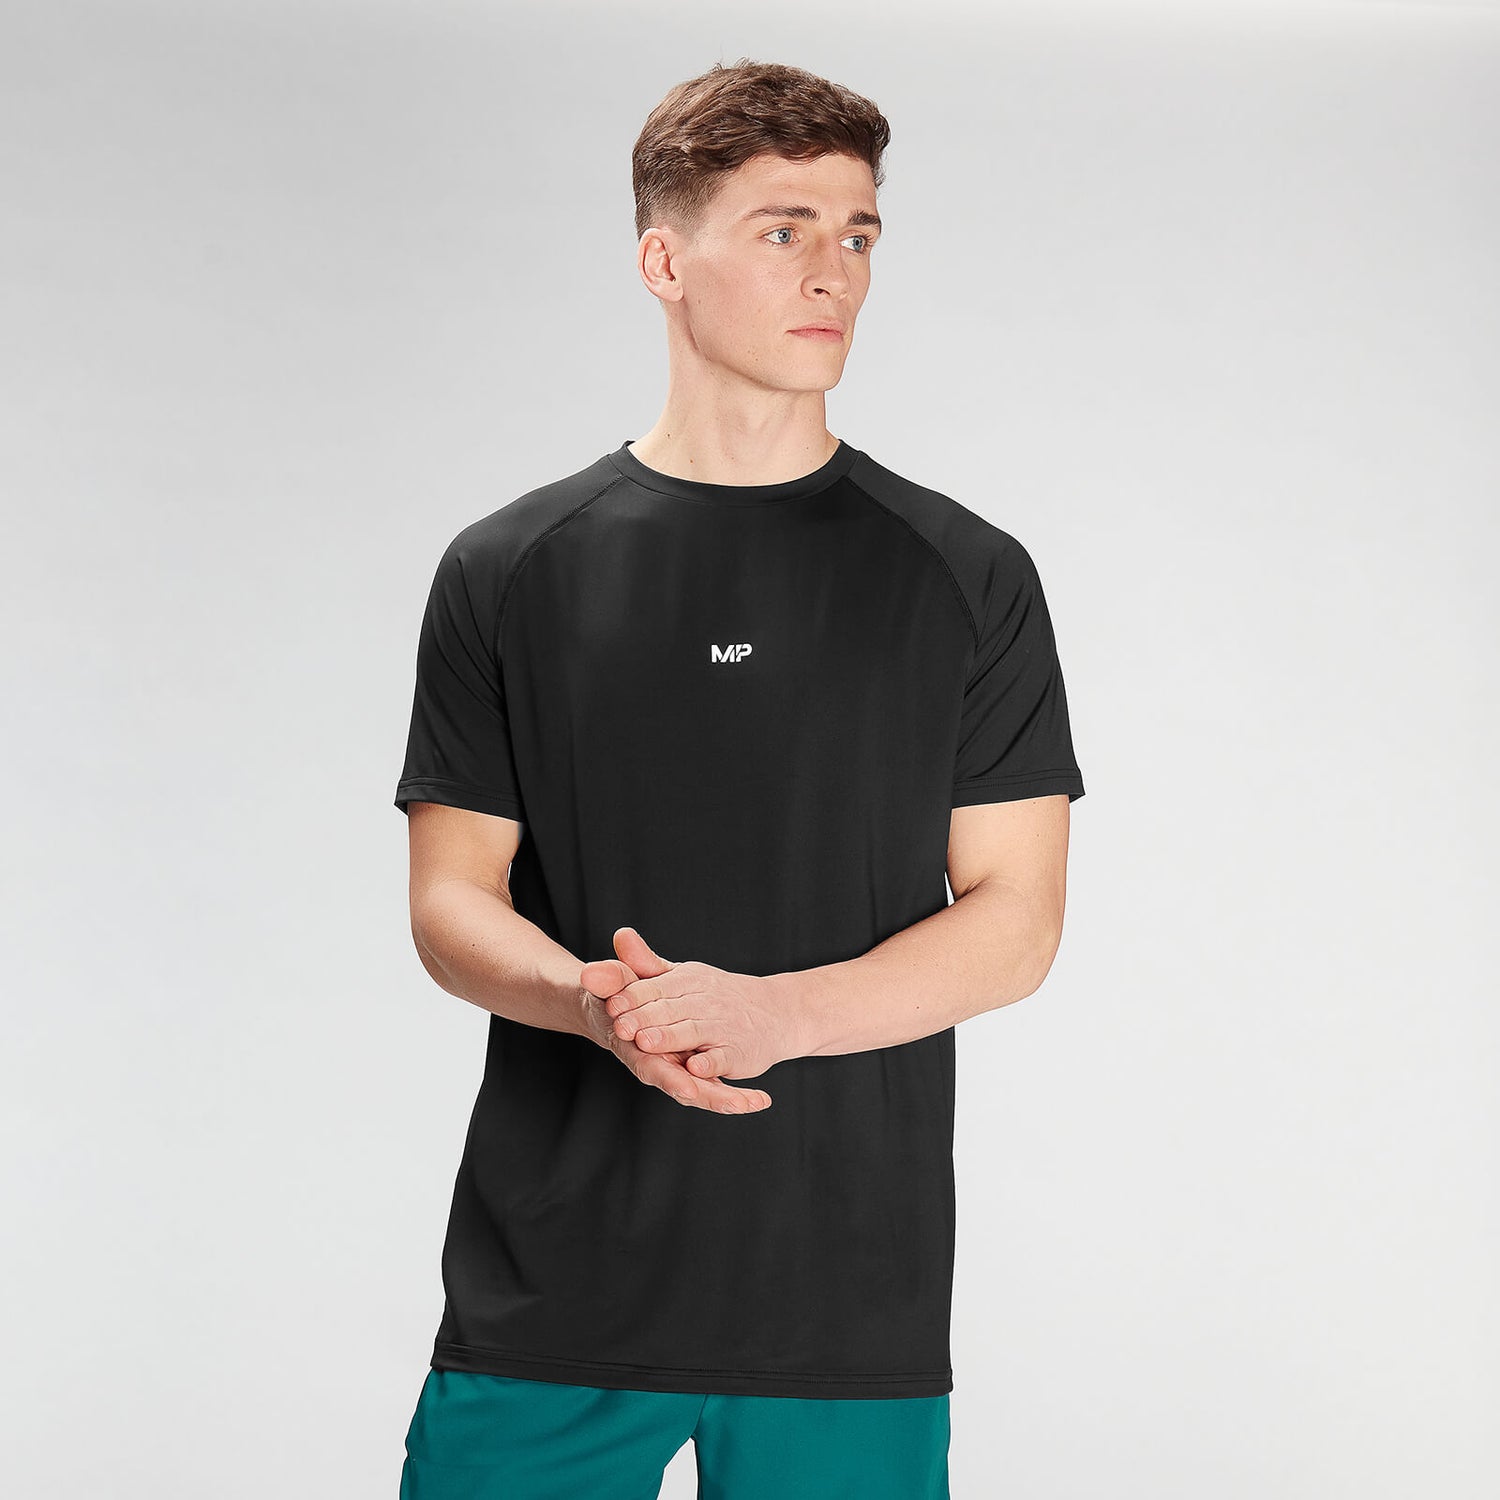 MP Men's Limited Edition Impact Short Sleeve T-Shirt - Black